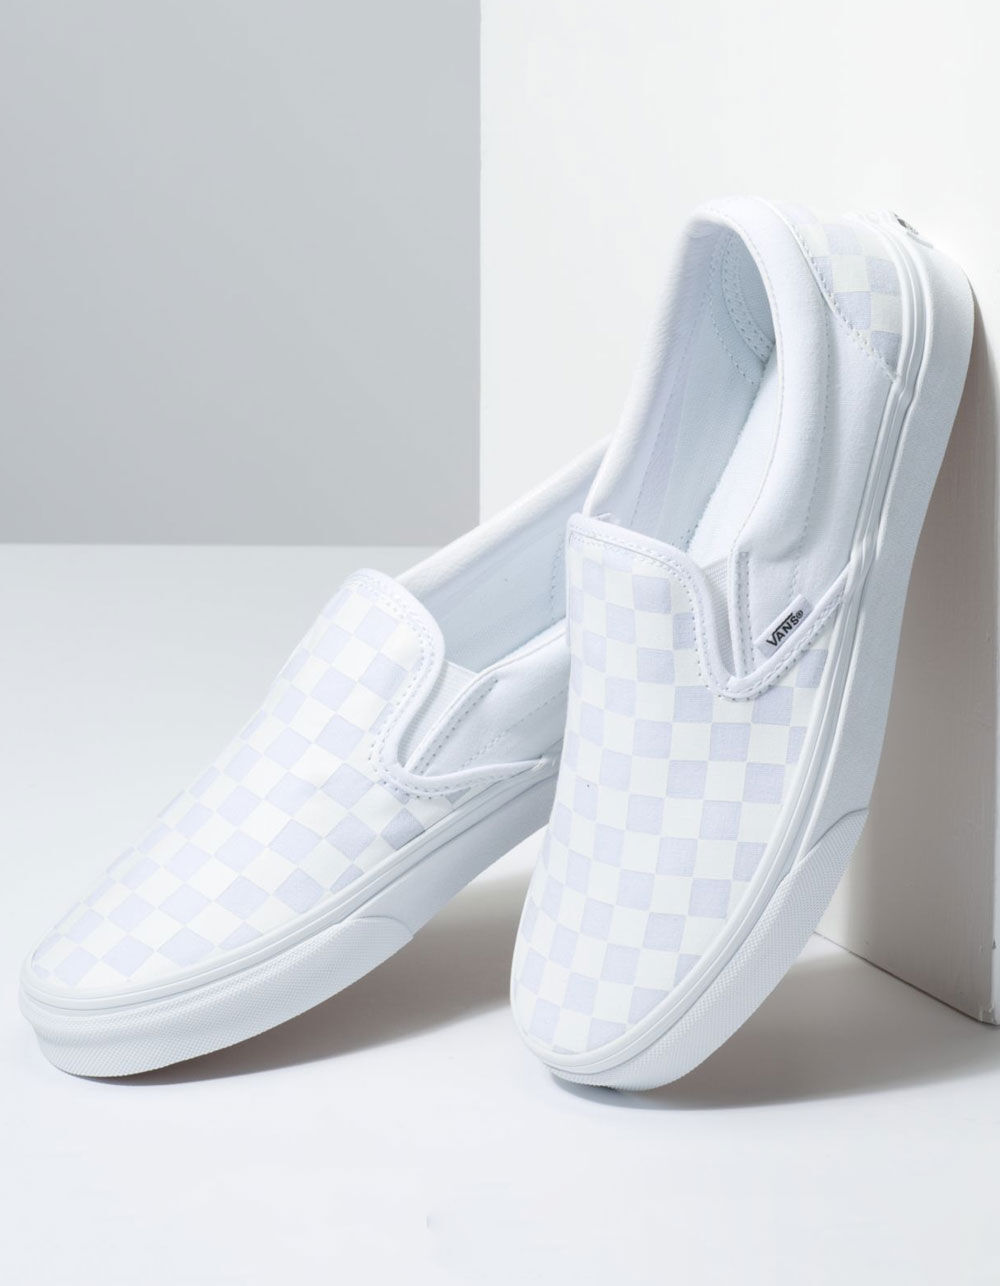 VANS Checkerboard Classic Slip-On True White Shoes - TRUE WHITE | Tillys